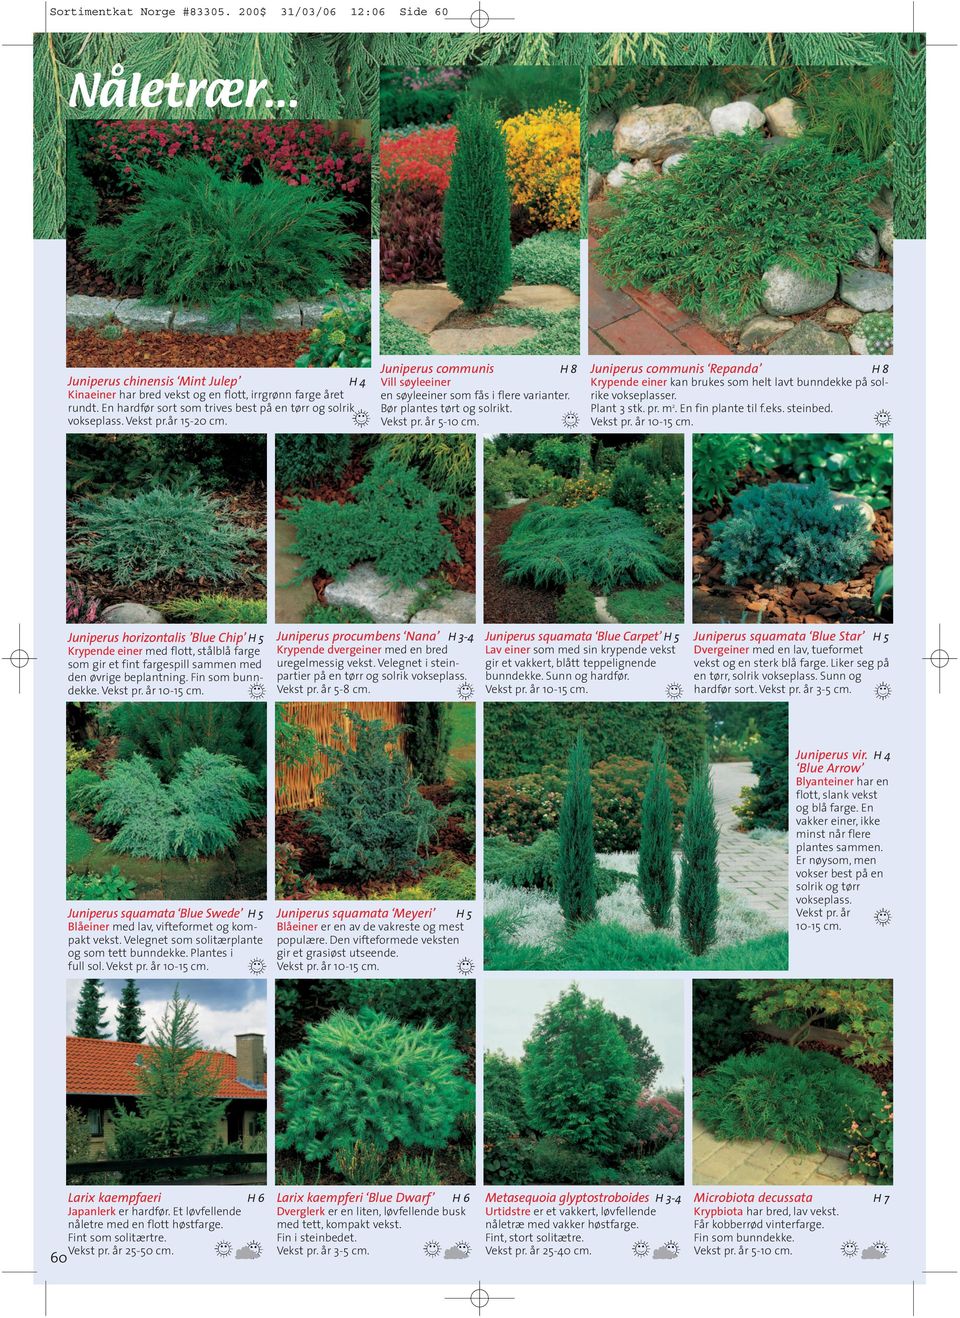 Juniperus communis Vill søyleeiner en søyleeiner som fås i flere varianter. Bør plantes tørt og solrikt. Vekst pr. år 5-10 cm.